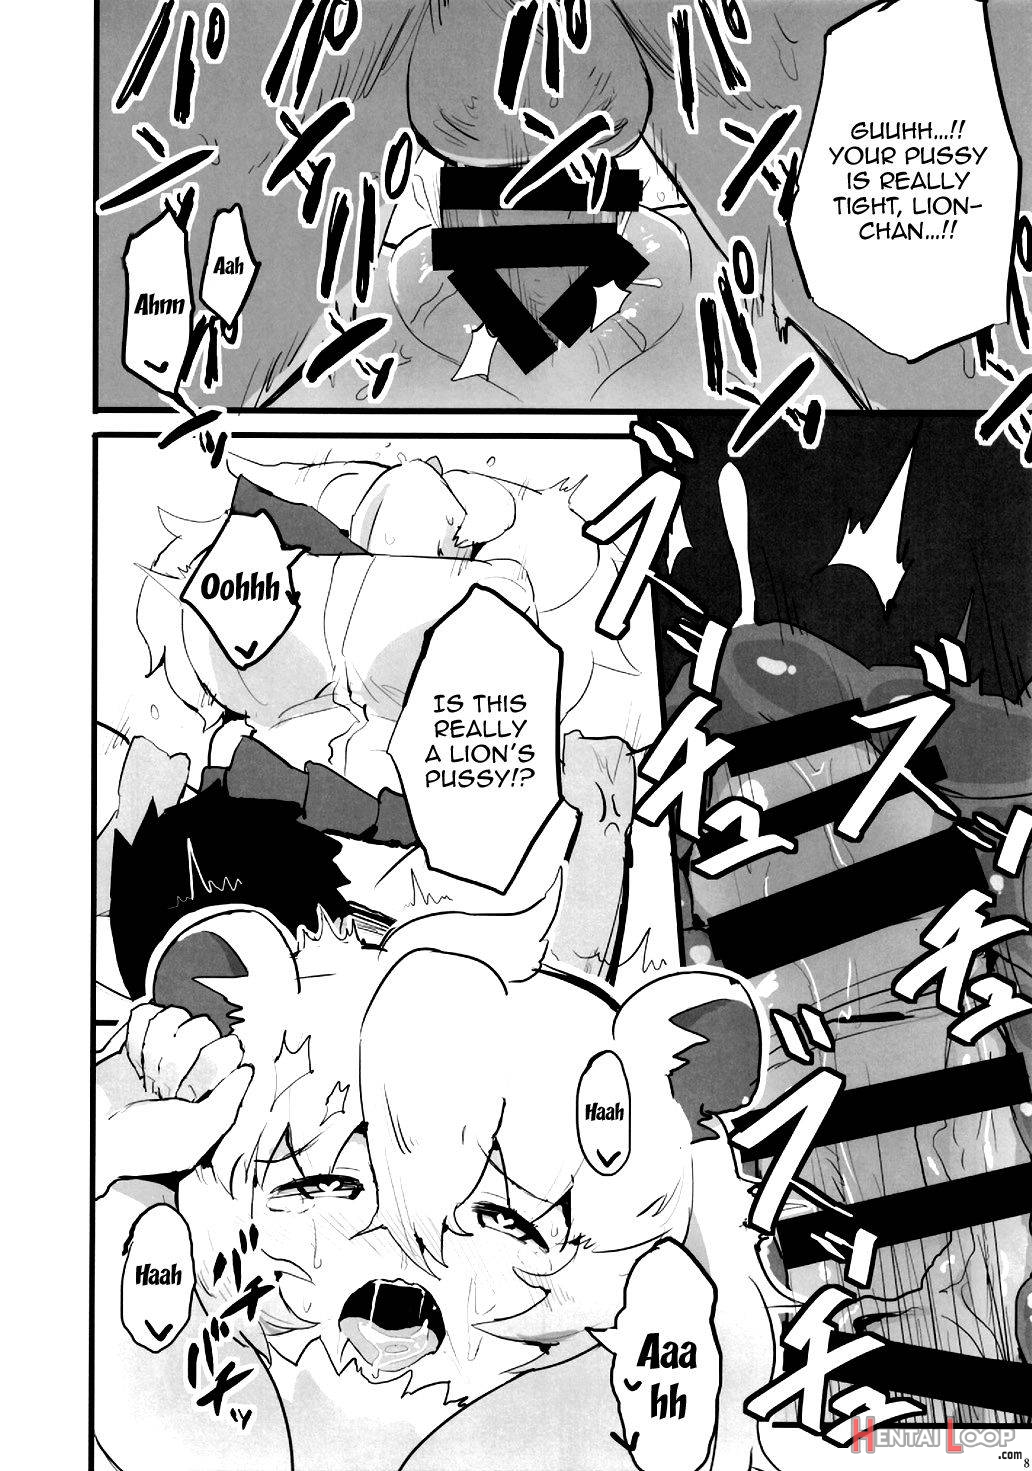 Lion-chan! Ecchi Shiyou! page 7